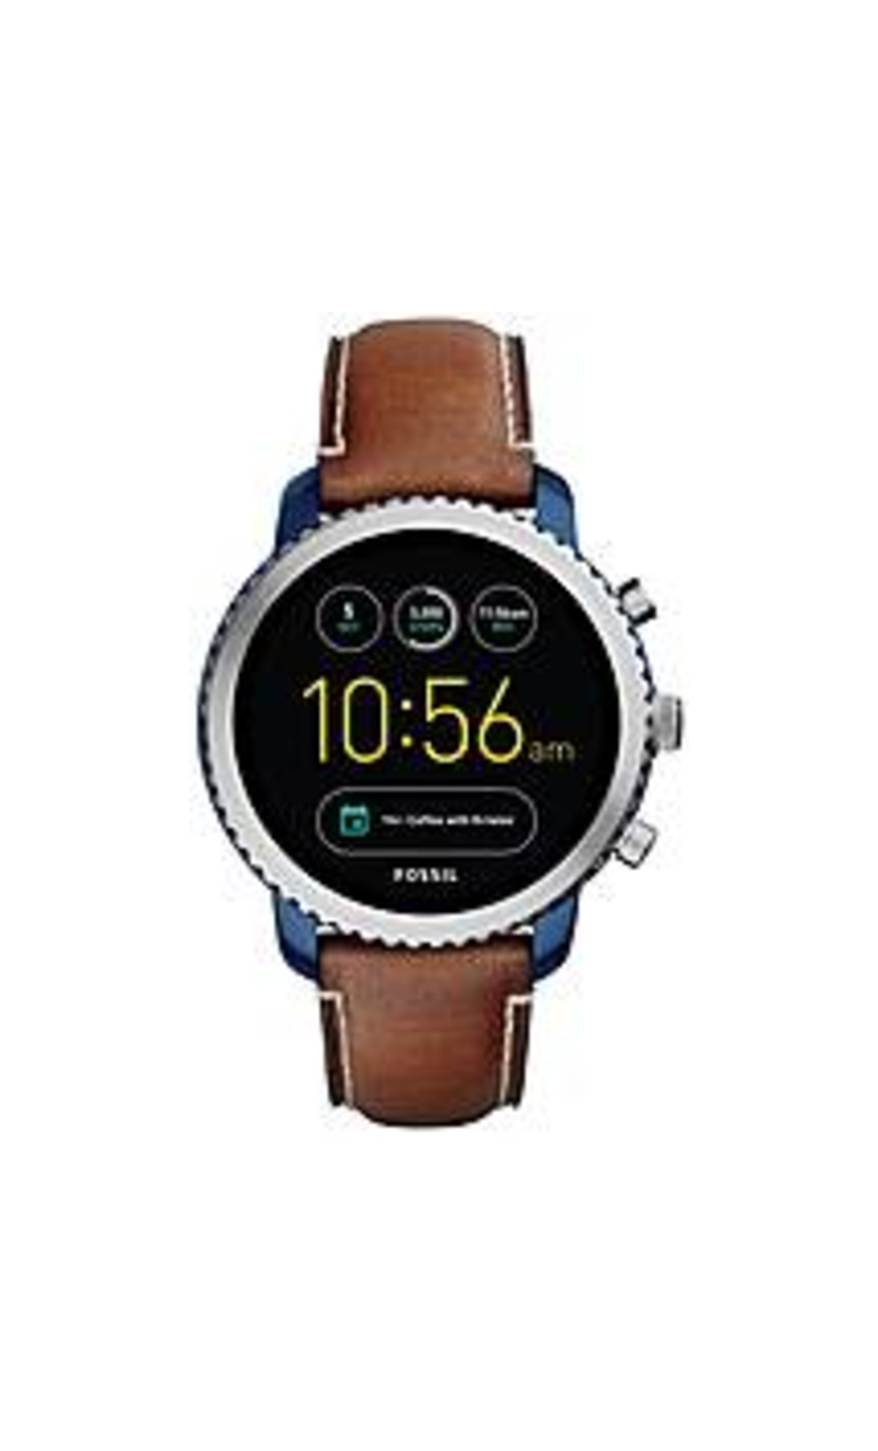 Fossil FTW4001 Q Explorist Generation 3 Smartwatch - 1.8-Inch Case Diameter - Brown Band - Blue IP